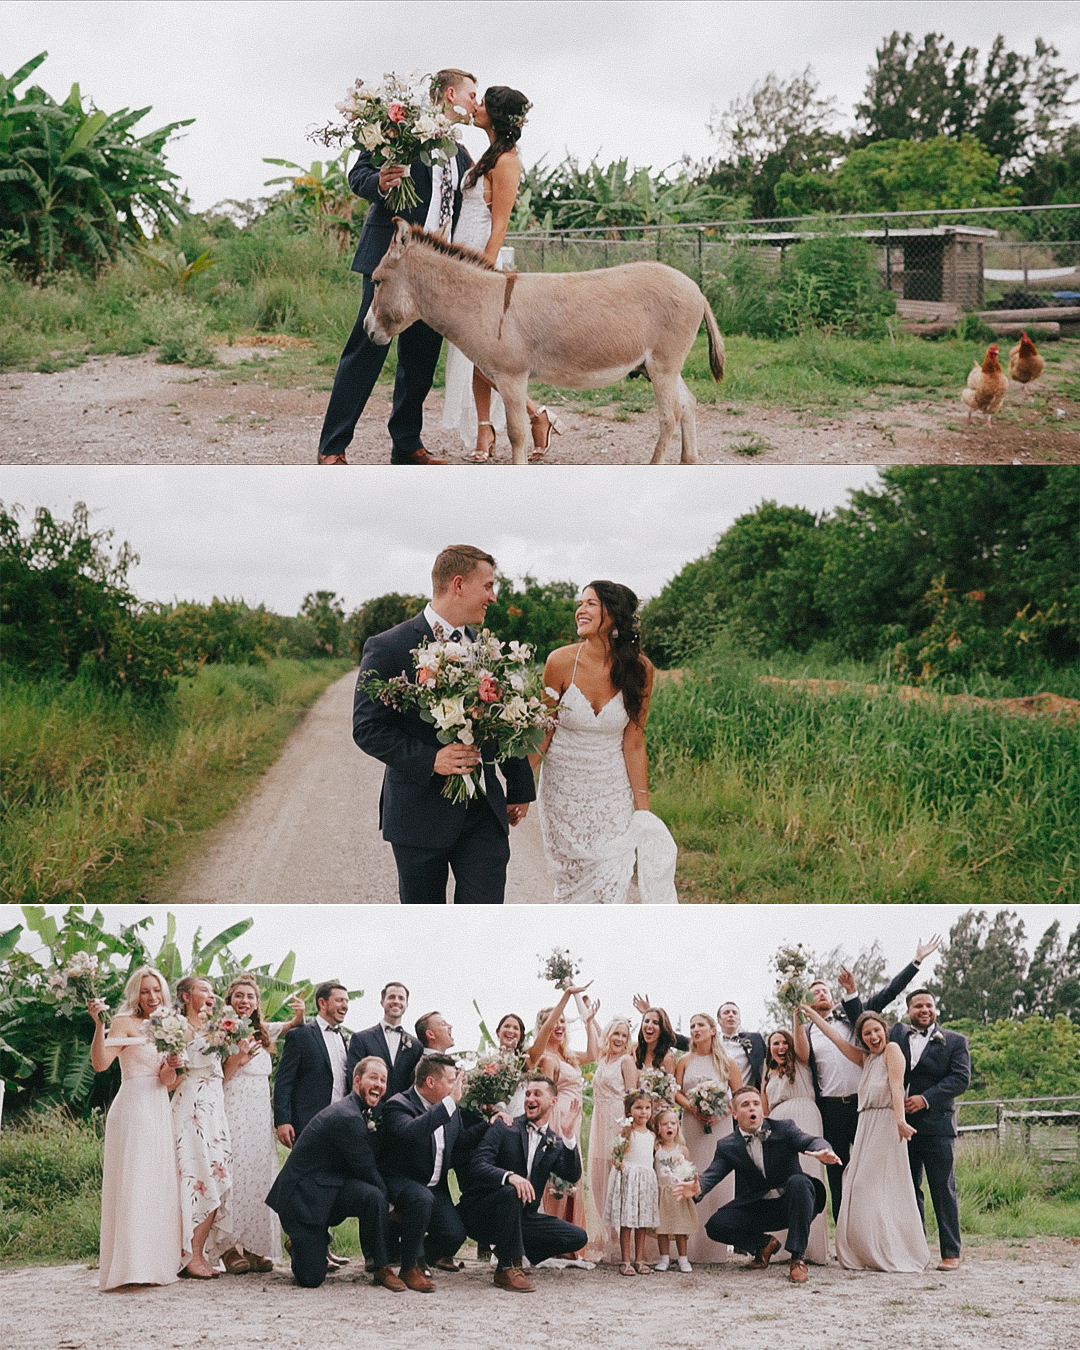 Elyssa and Jeff farm wedding in Florida - image 3